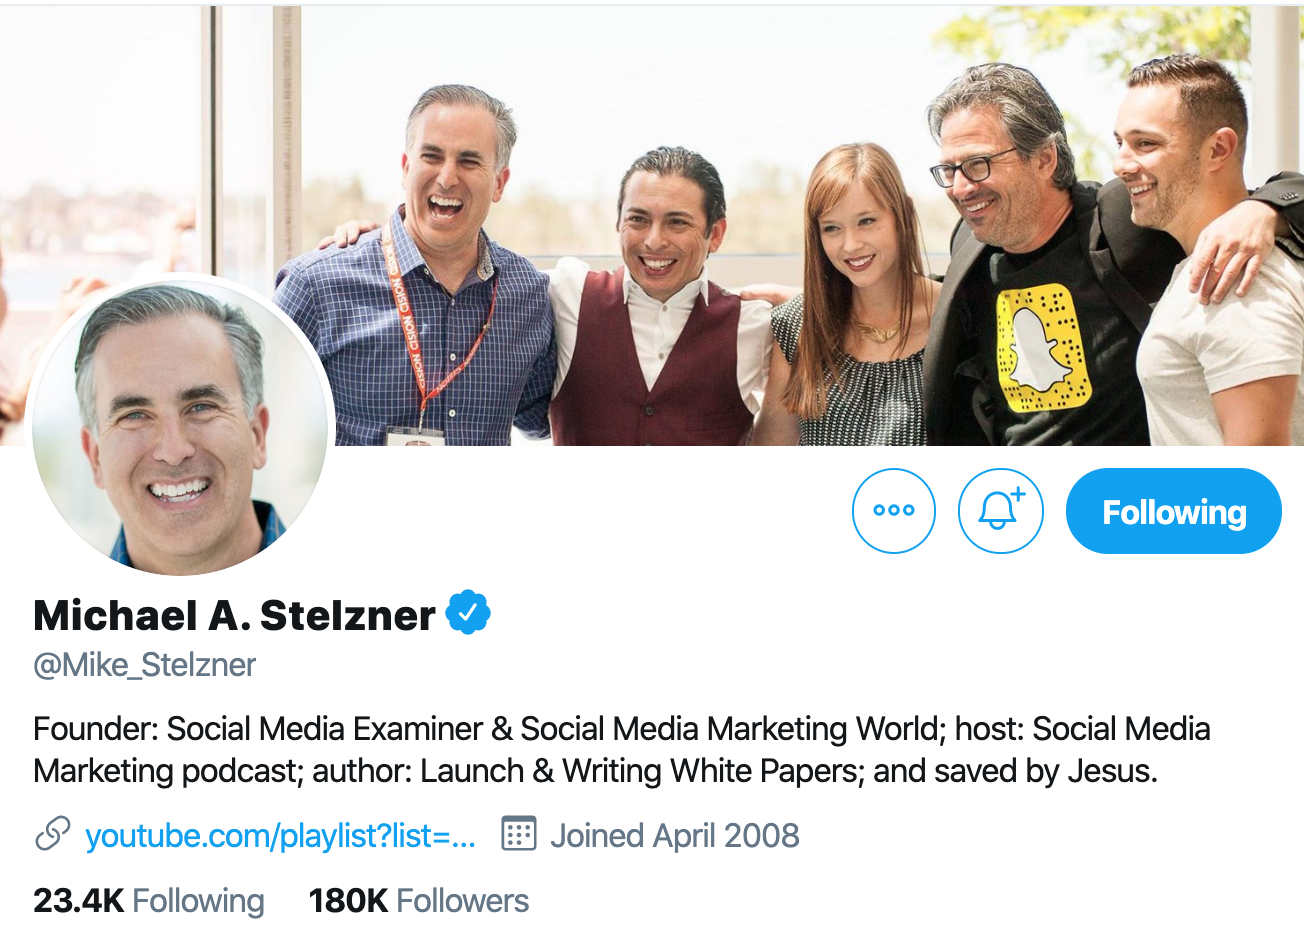 Michael Stelzner. Social media marketer to follow on twitter